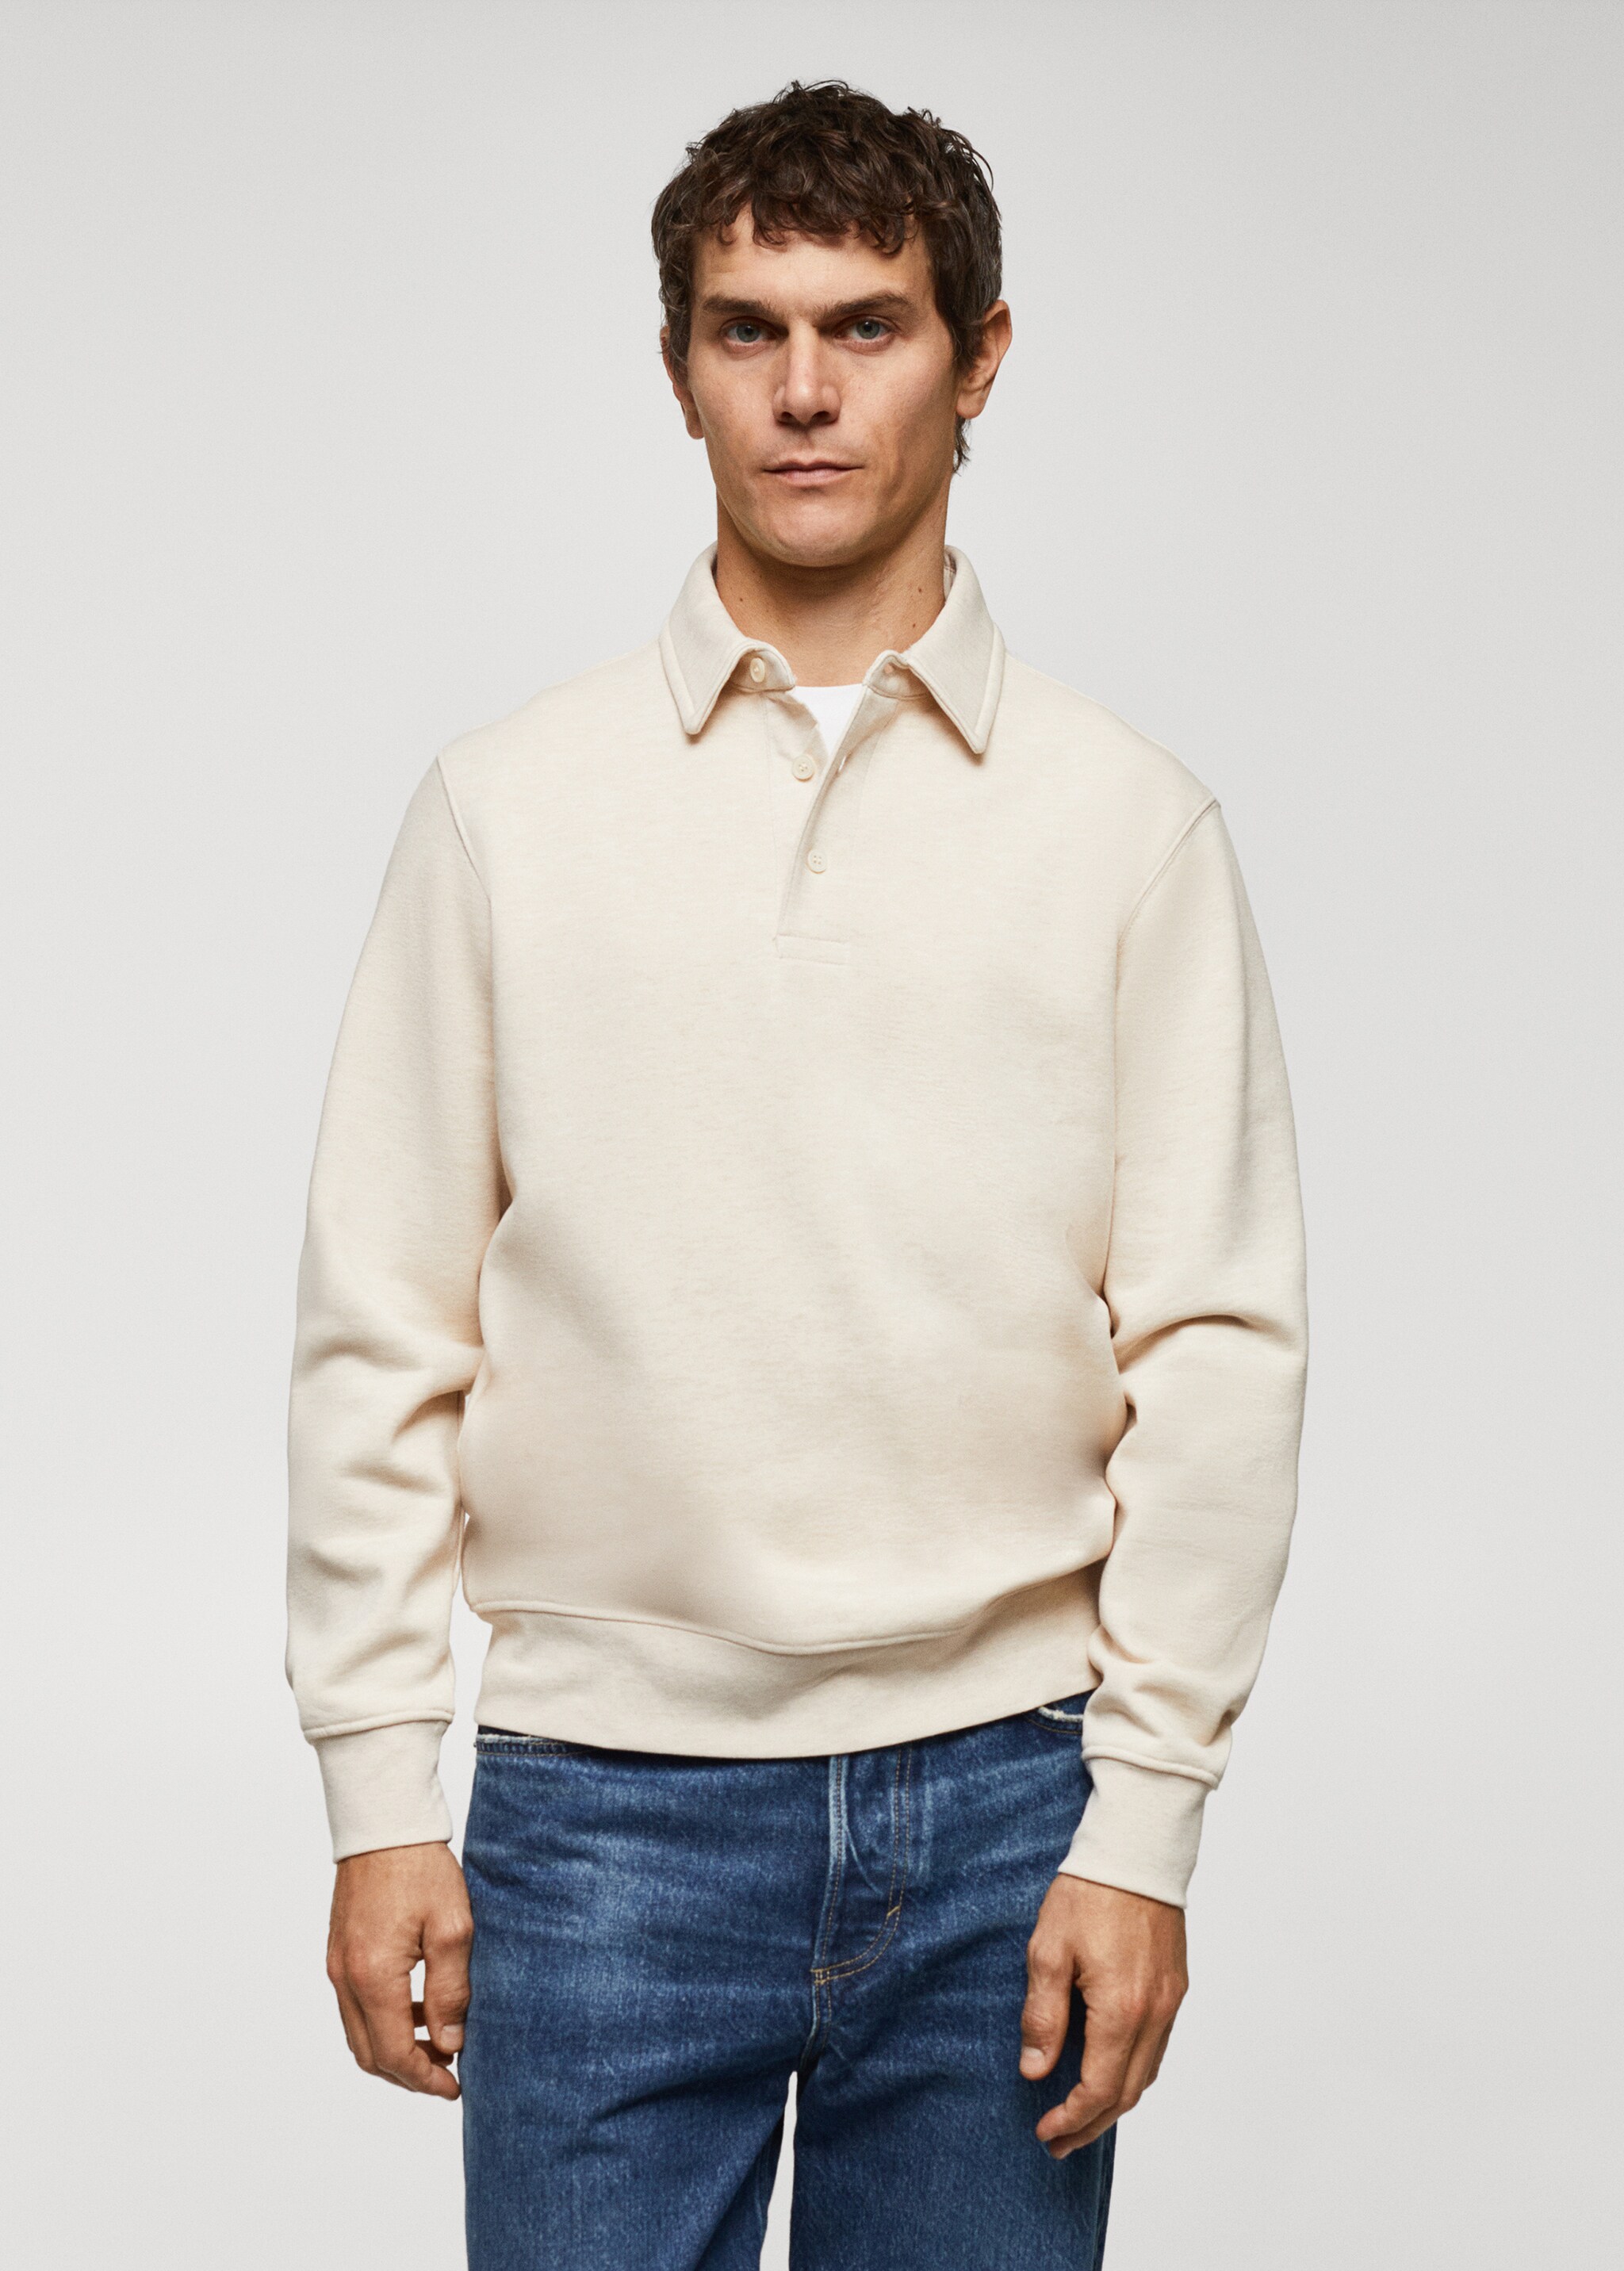 Cotton polo sweatshirt - Medium plane